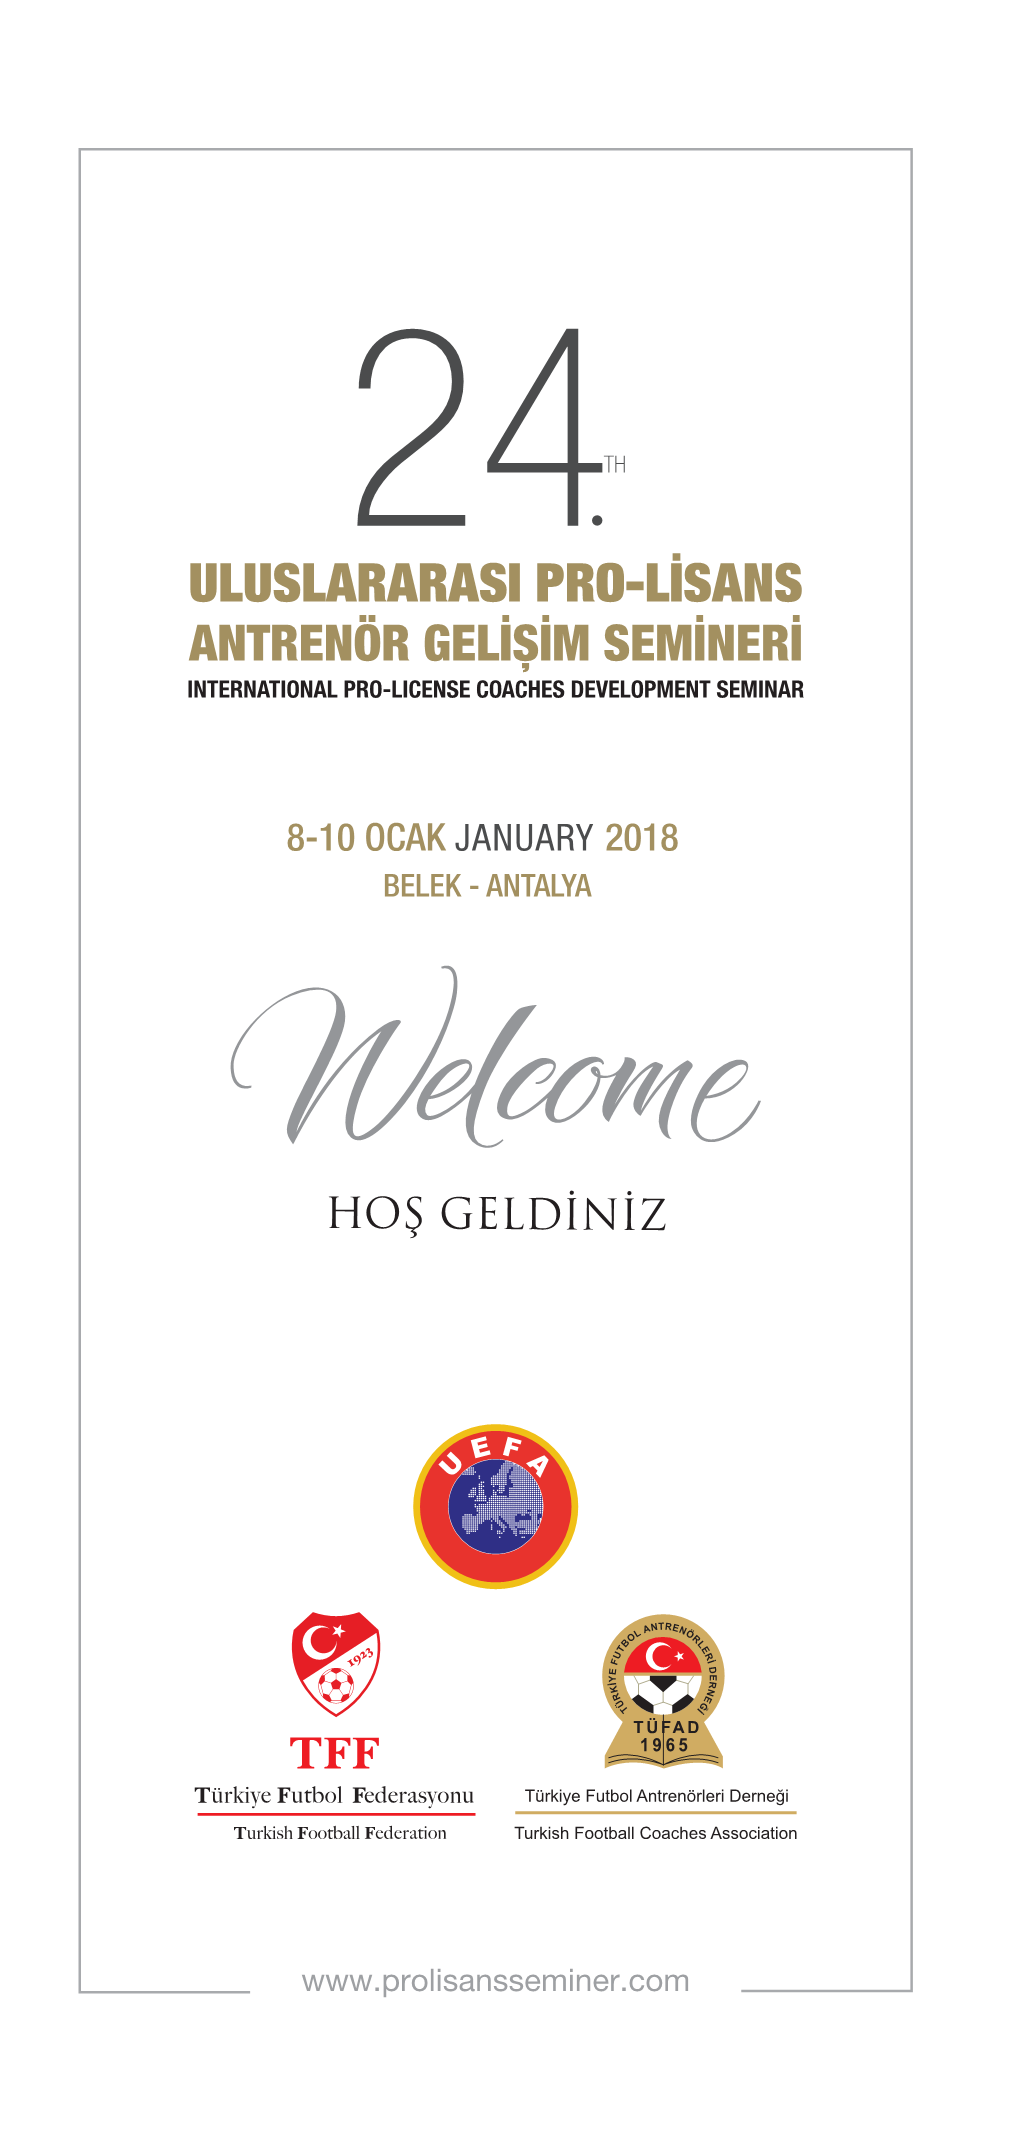 Uluslararasi Pro-Lisans Antrenör Gelișim Semineri International Pro-License Coaches Development Seminar